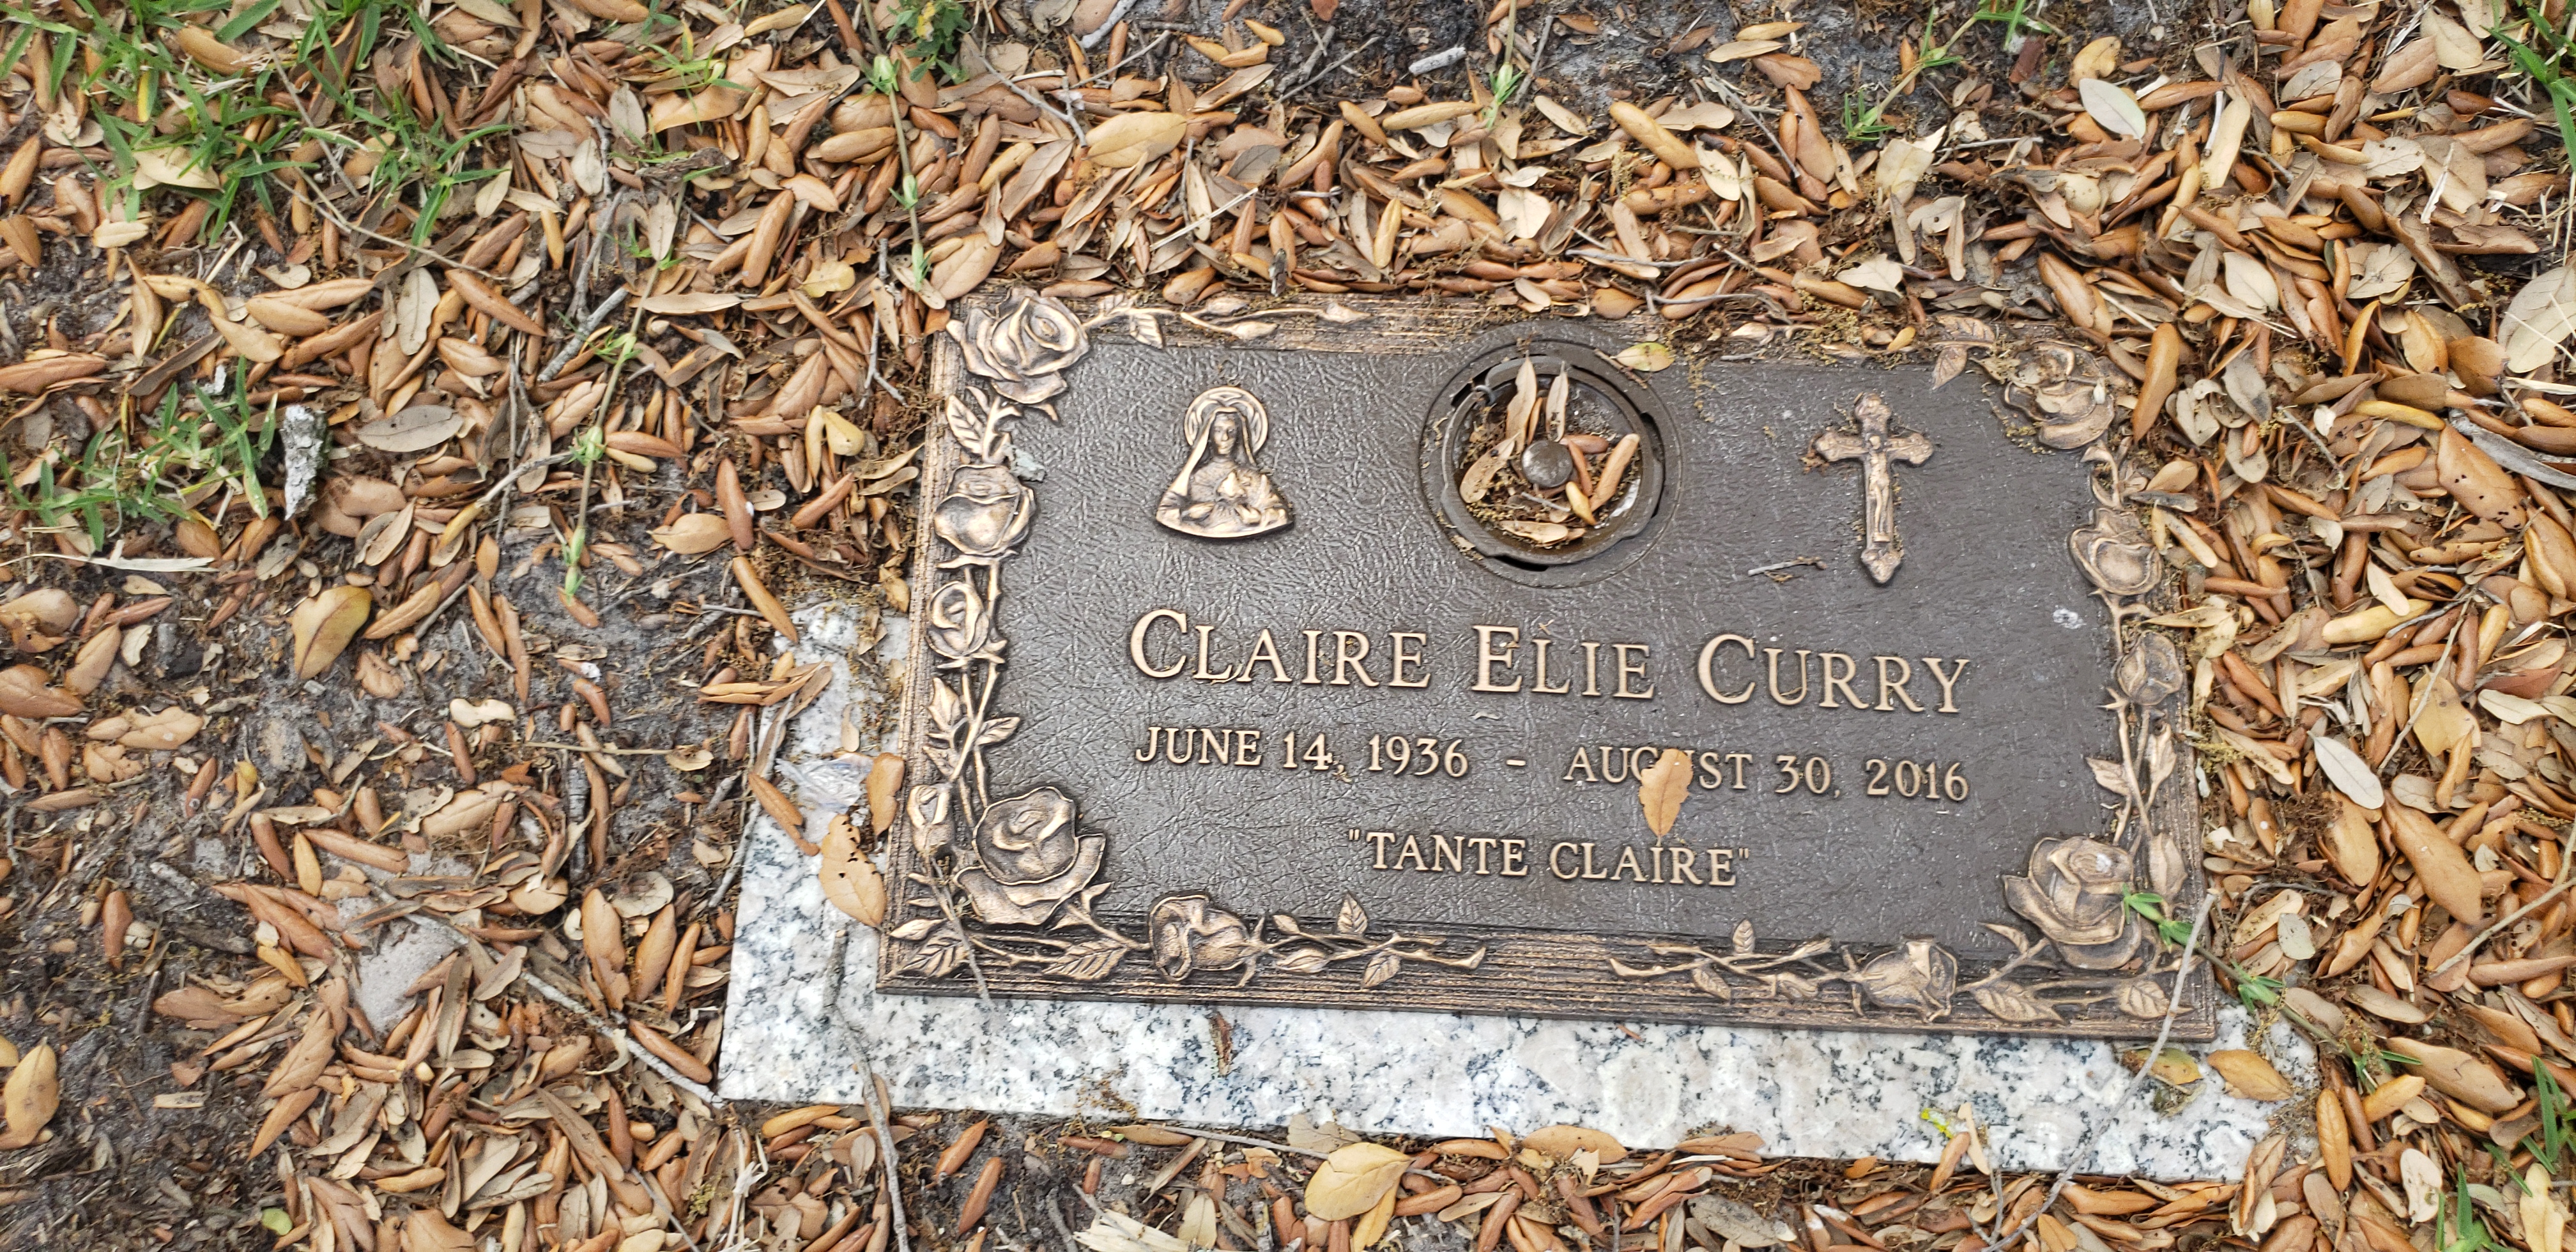 Claire Elie Curry